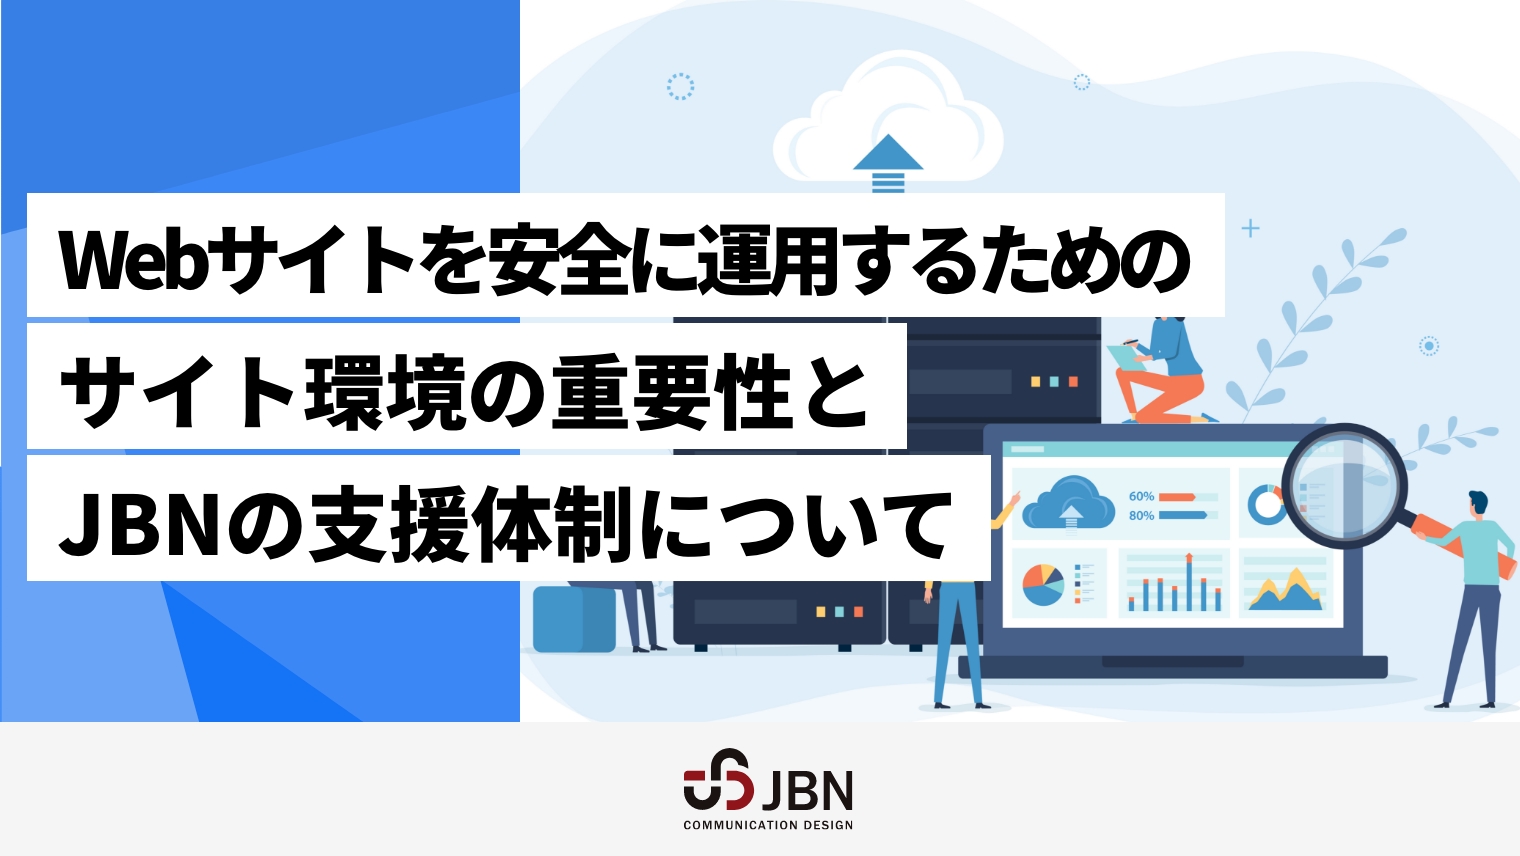 Webサイトを安全に運用するためのサイト環境の重要性とJBNの支援体制について